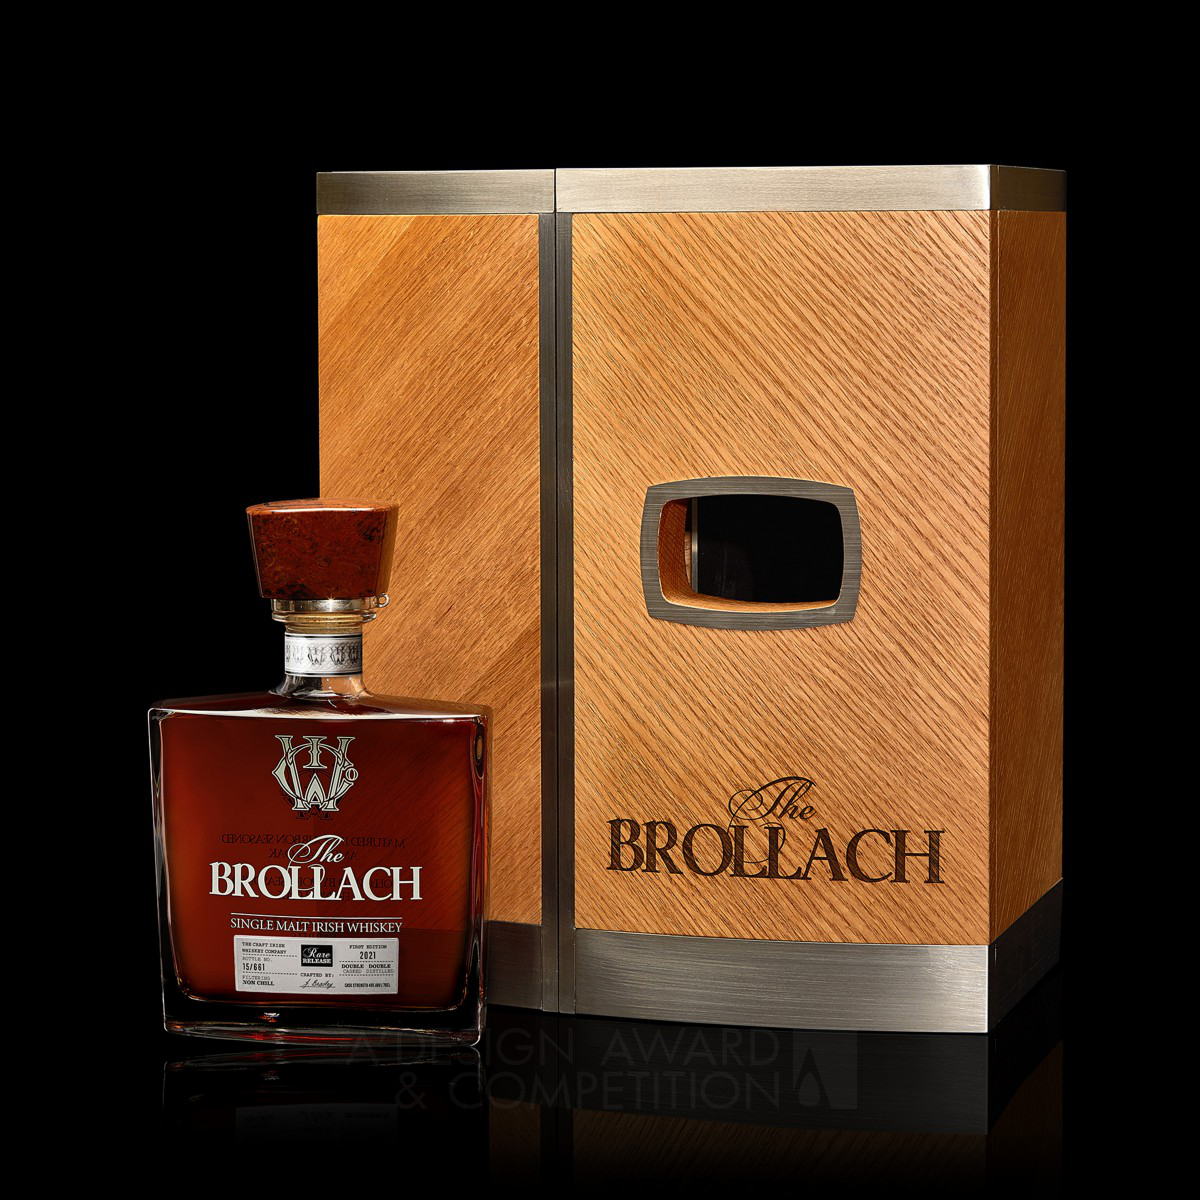 The Brollach Single Malt Irish Whiskey by Tiago Russo